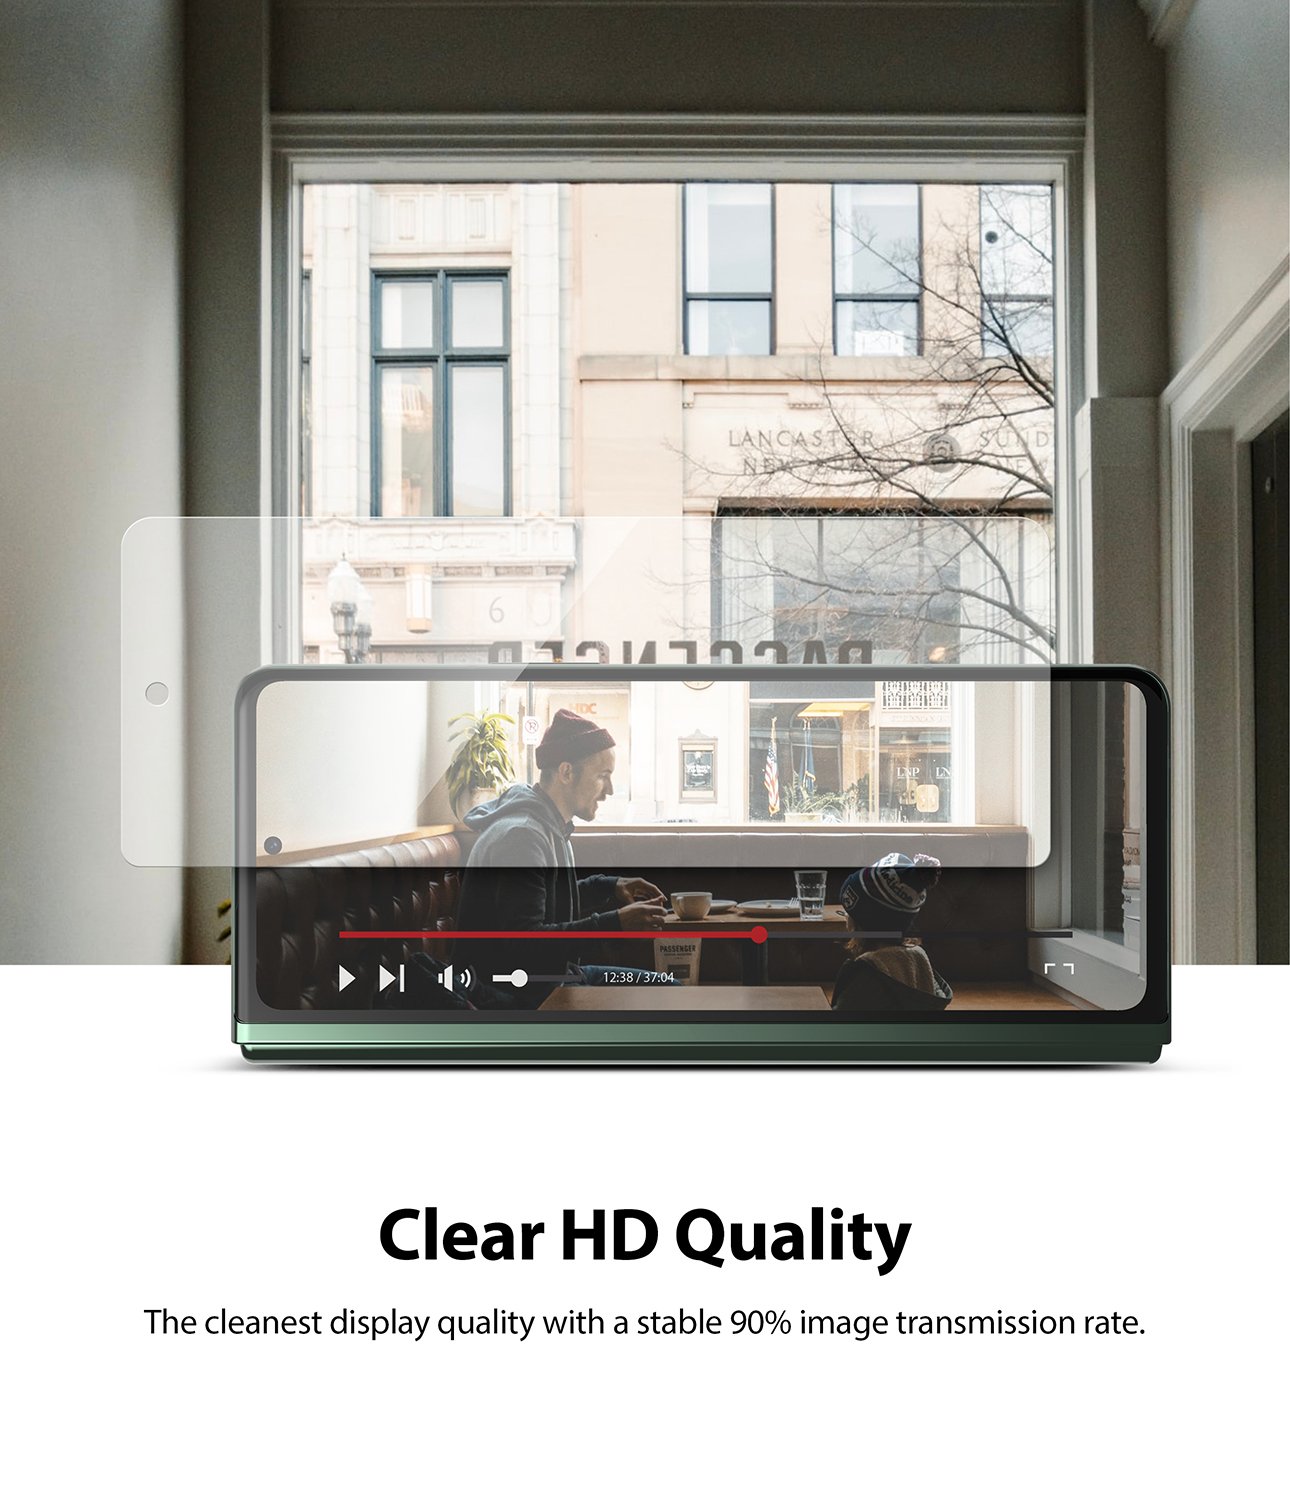 Samsung Galaxy Z Fold 3 Skärmskydd skyddsfilm - ID